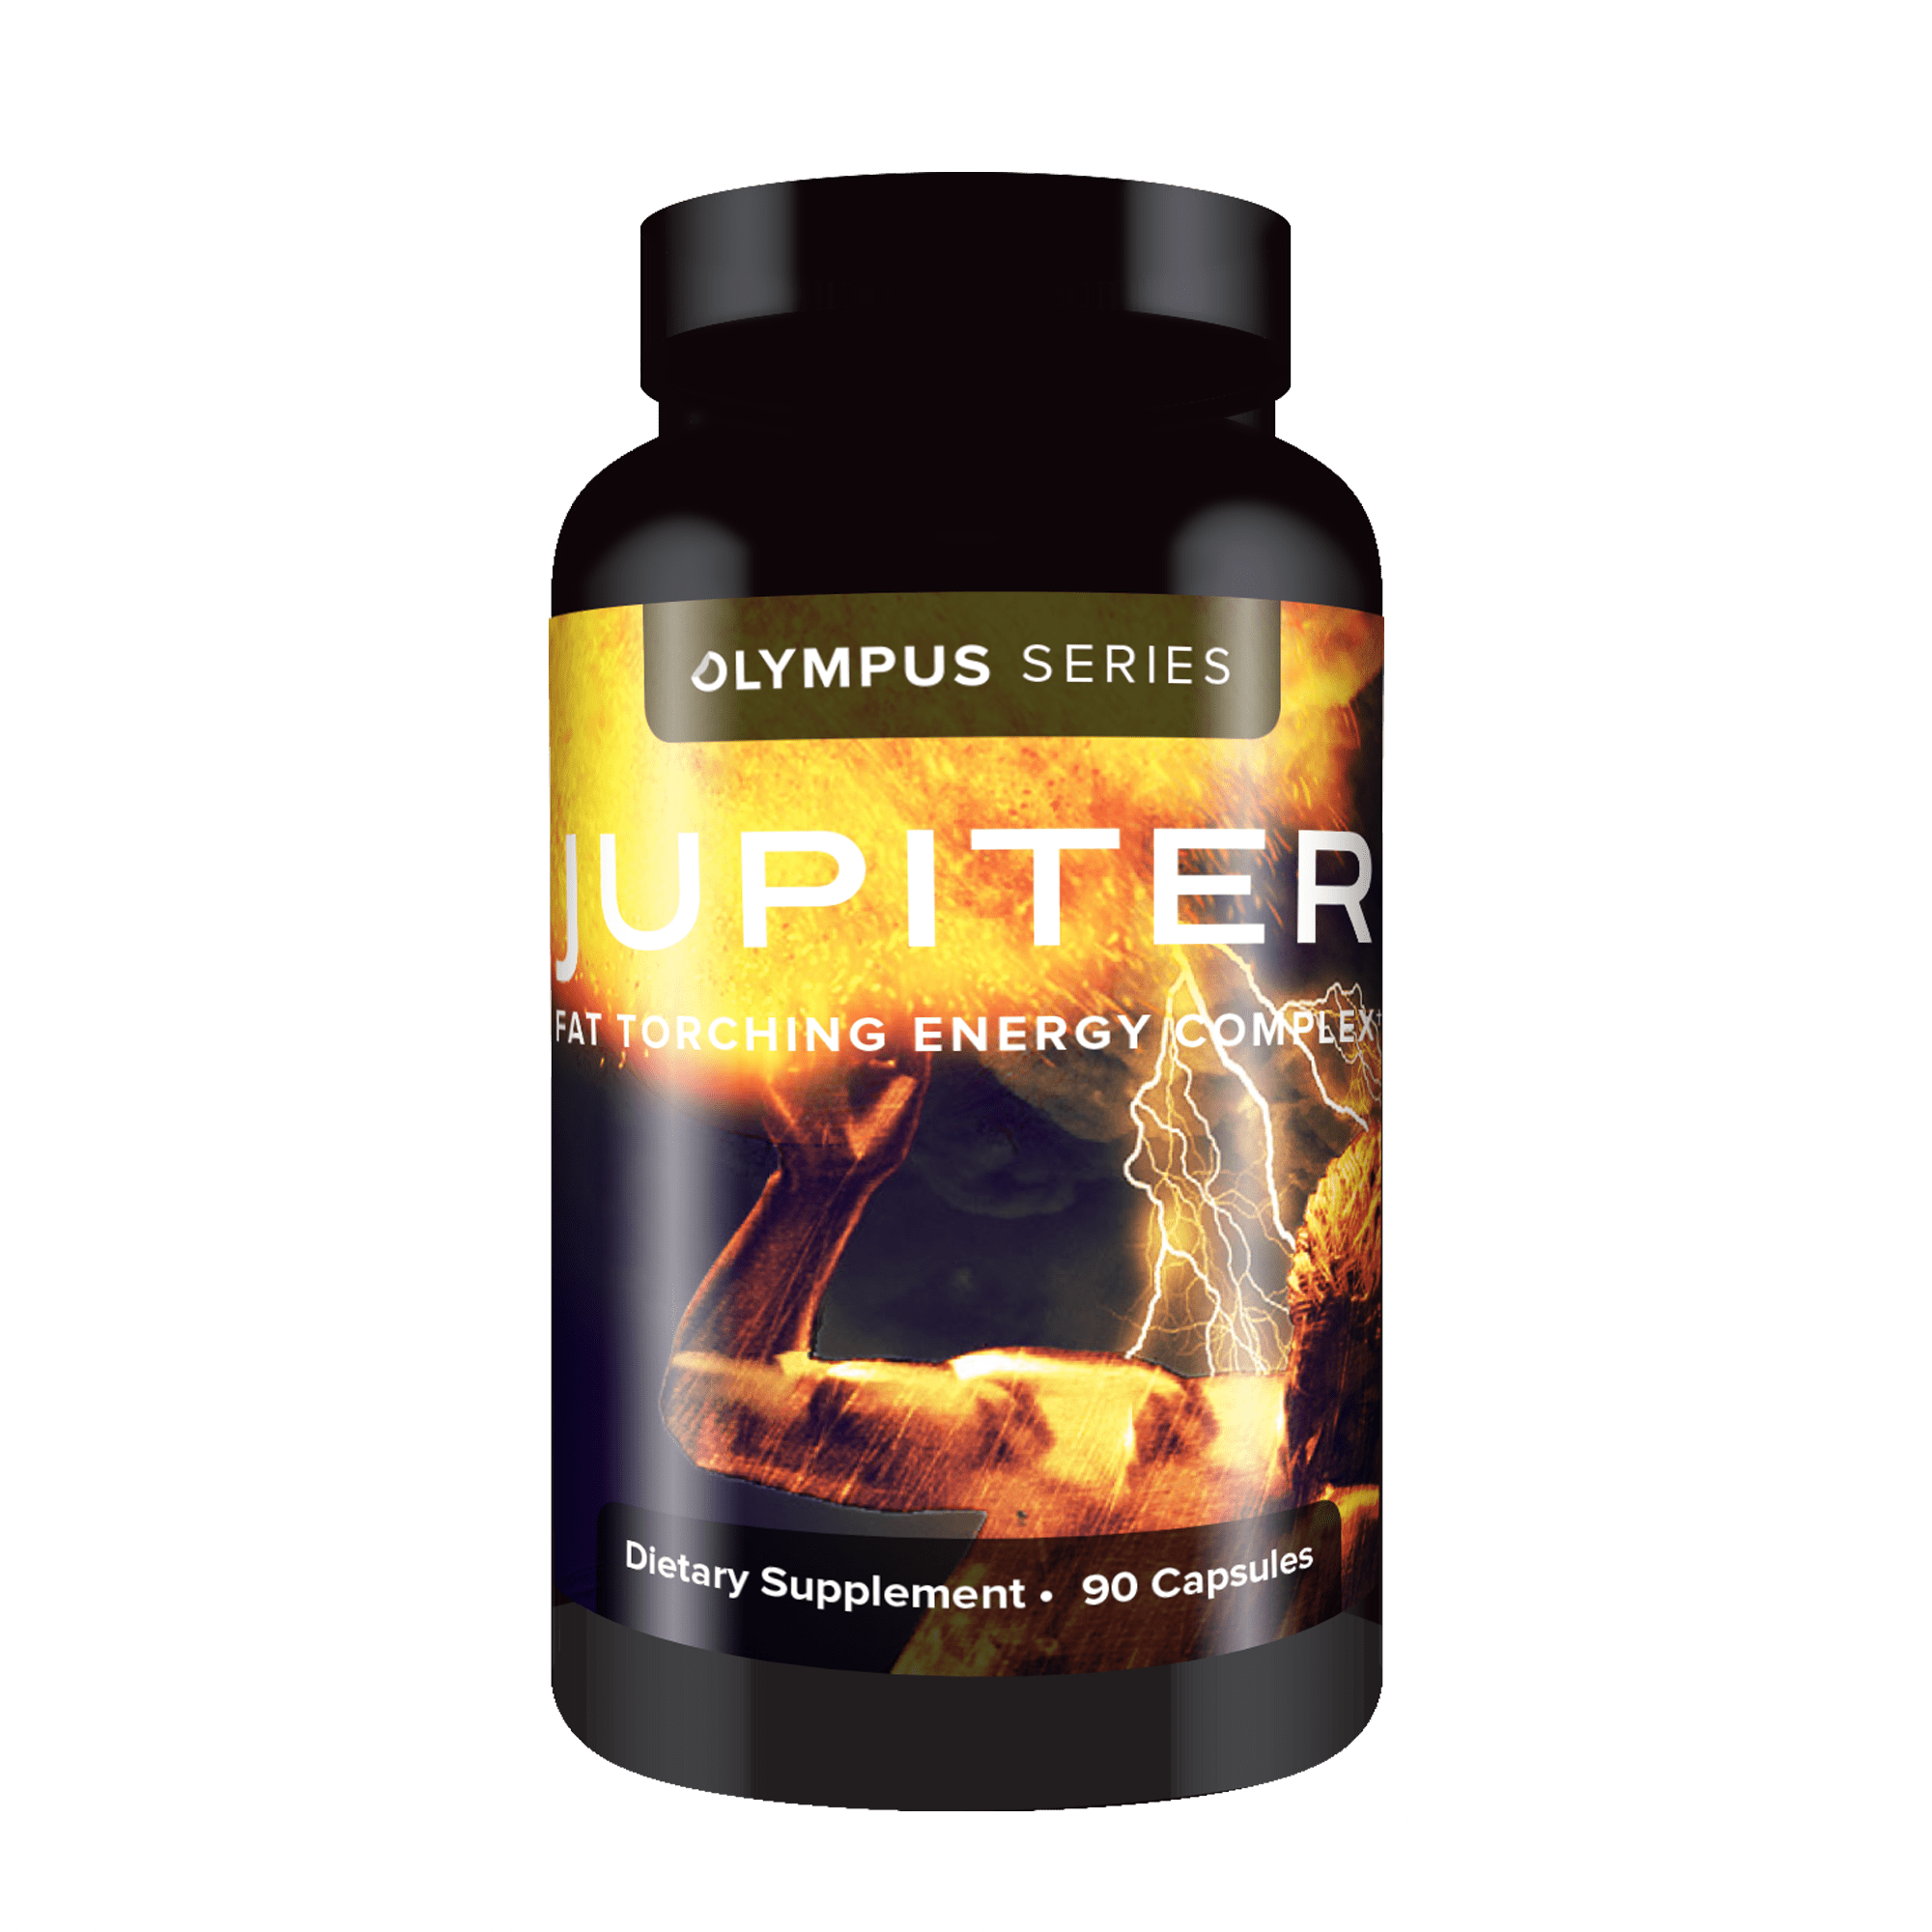 JUPITER™ FAT TORCHING ENERGY COMPLEX